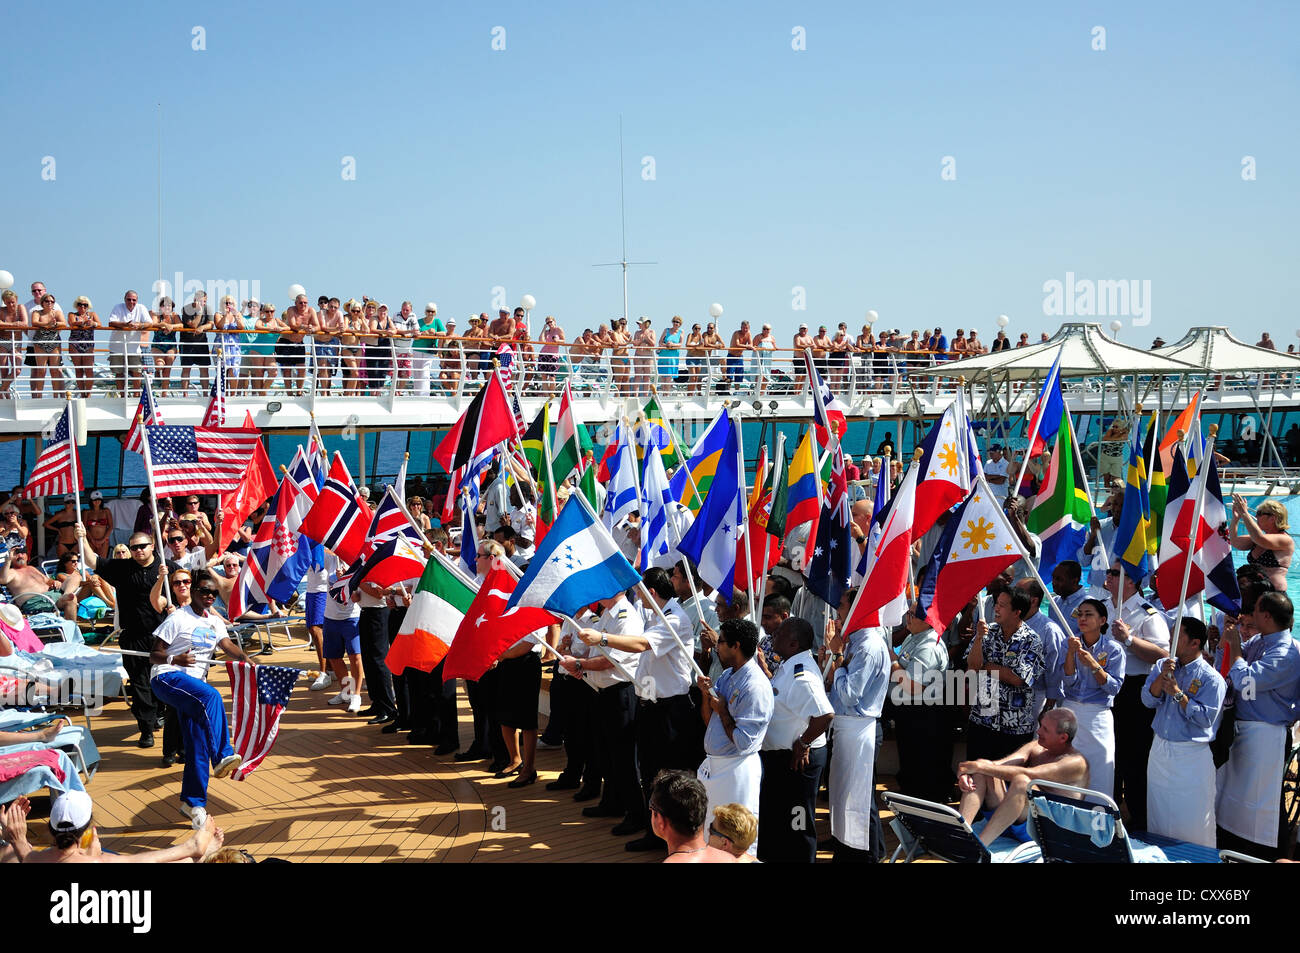 International staff procession on board Royal Caribbean 'Grandeur of the Seas' cruise ship, Adriatic Sea, Mediterranean, Europe Stock Photo